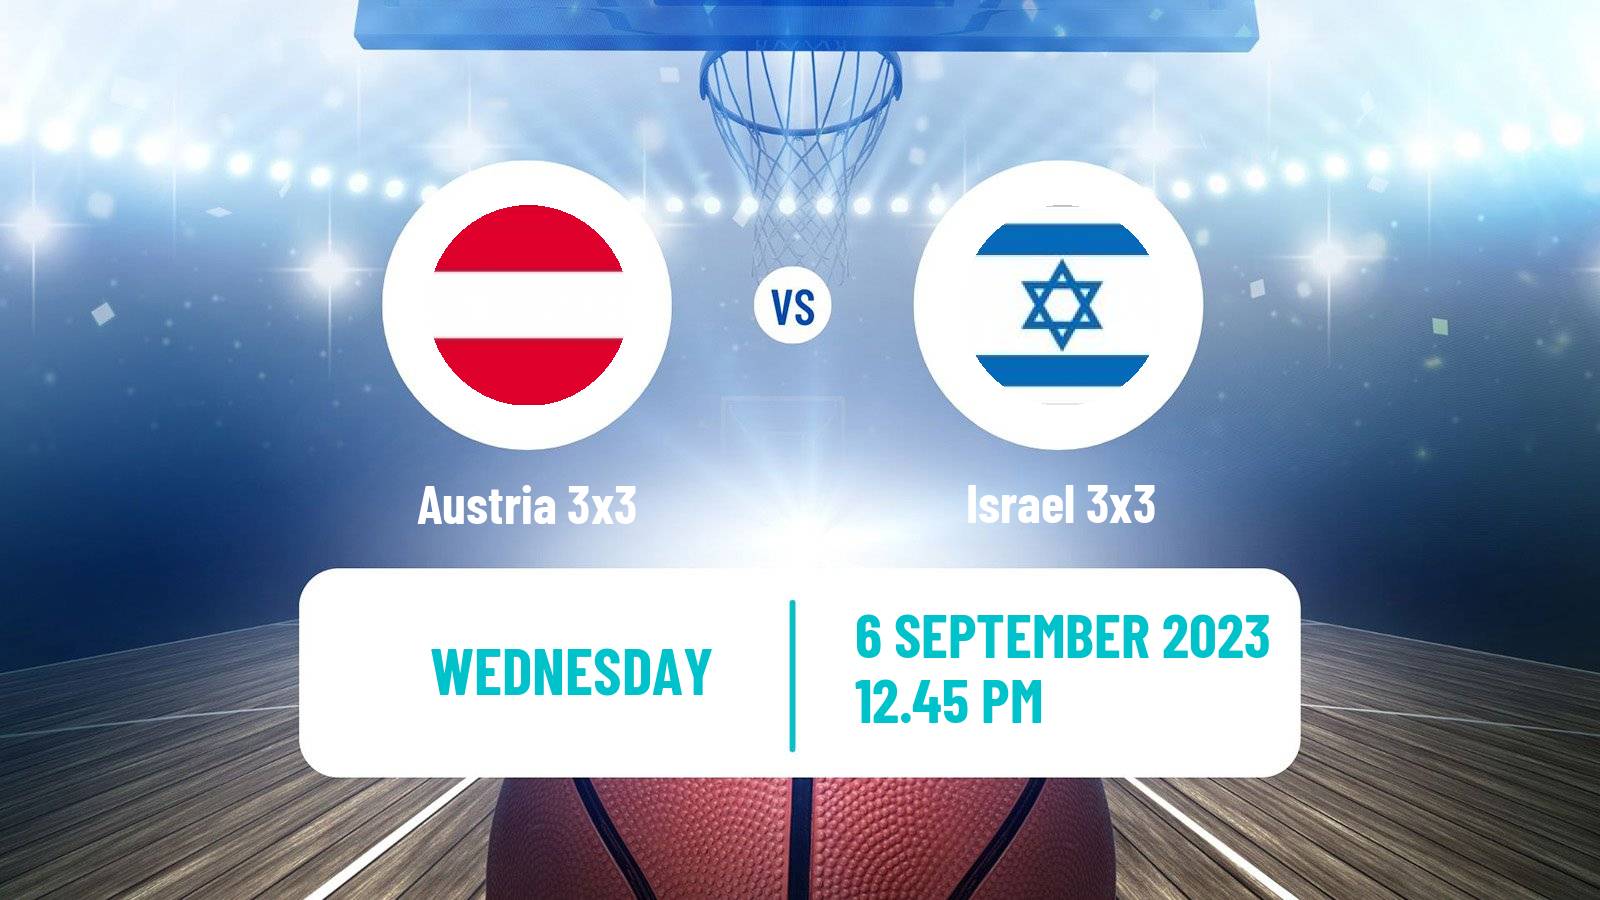 Basketball Europe Cup Basketball 3x3 Austria 3x3 - Israel 3x3